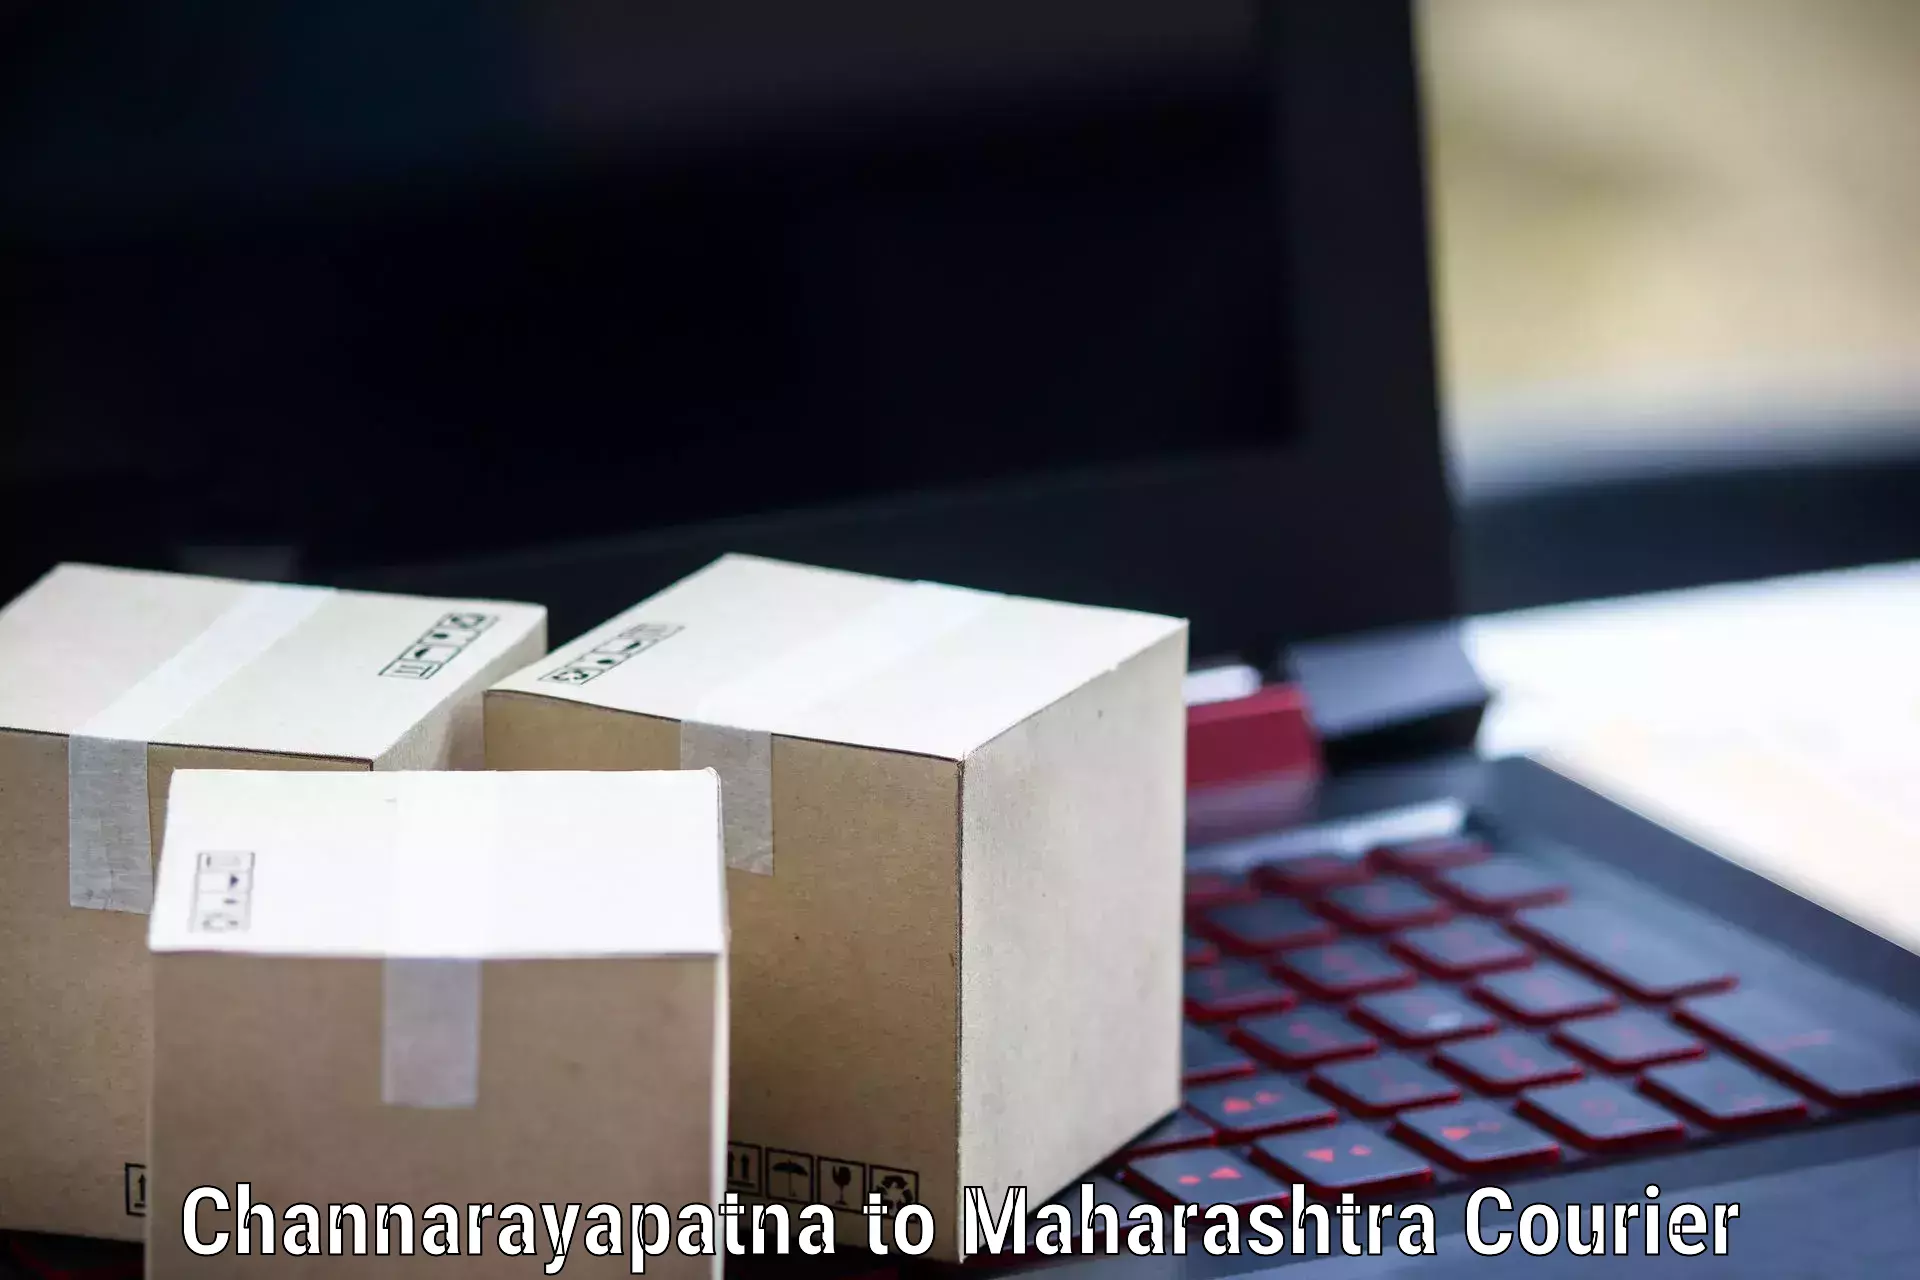 Global courier networks Channarayapatna to Hingoli